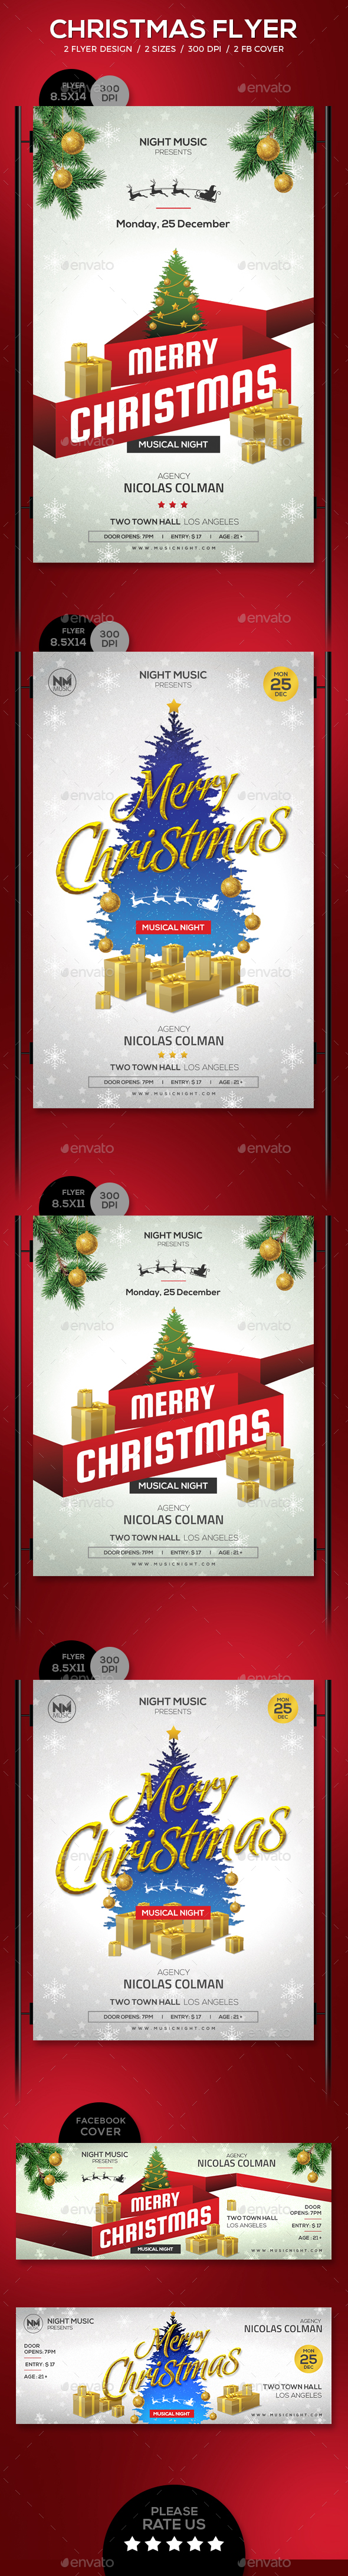 GraphicRiver Christmas Flyer 20829455